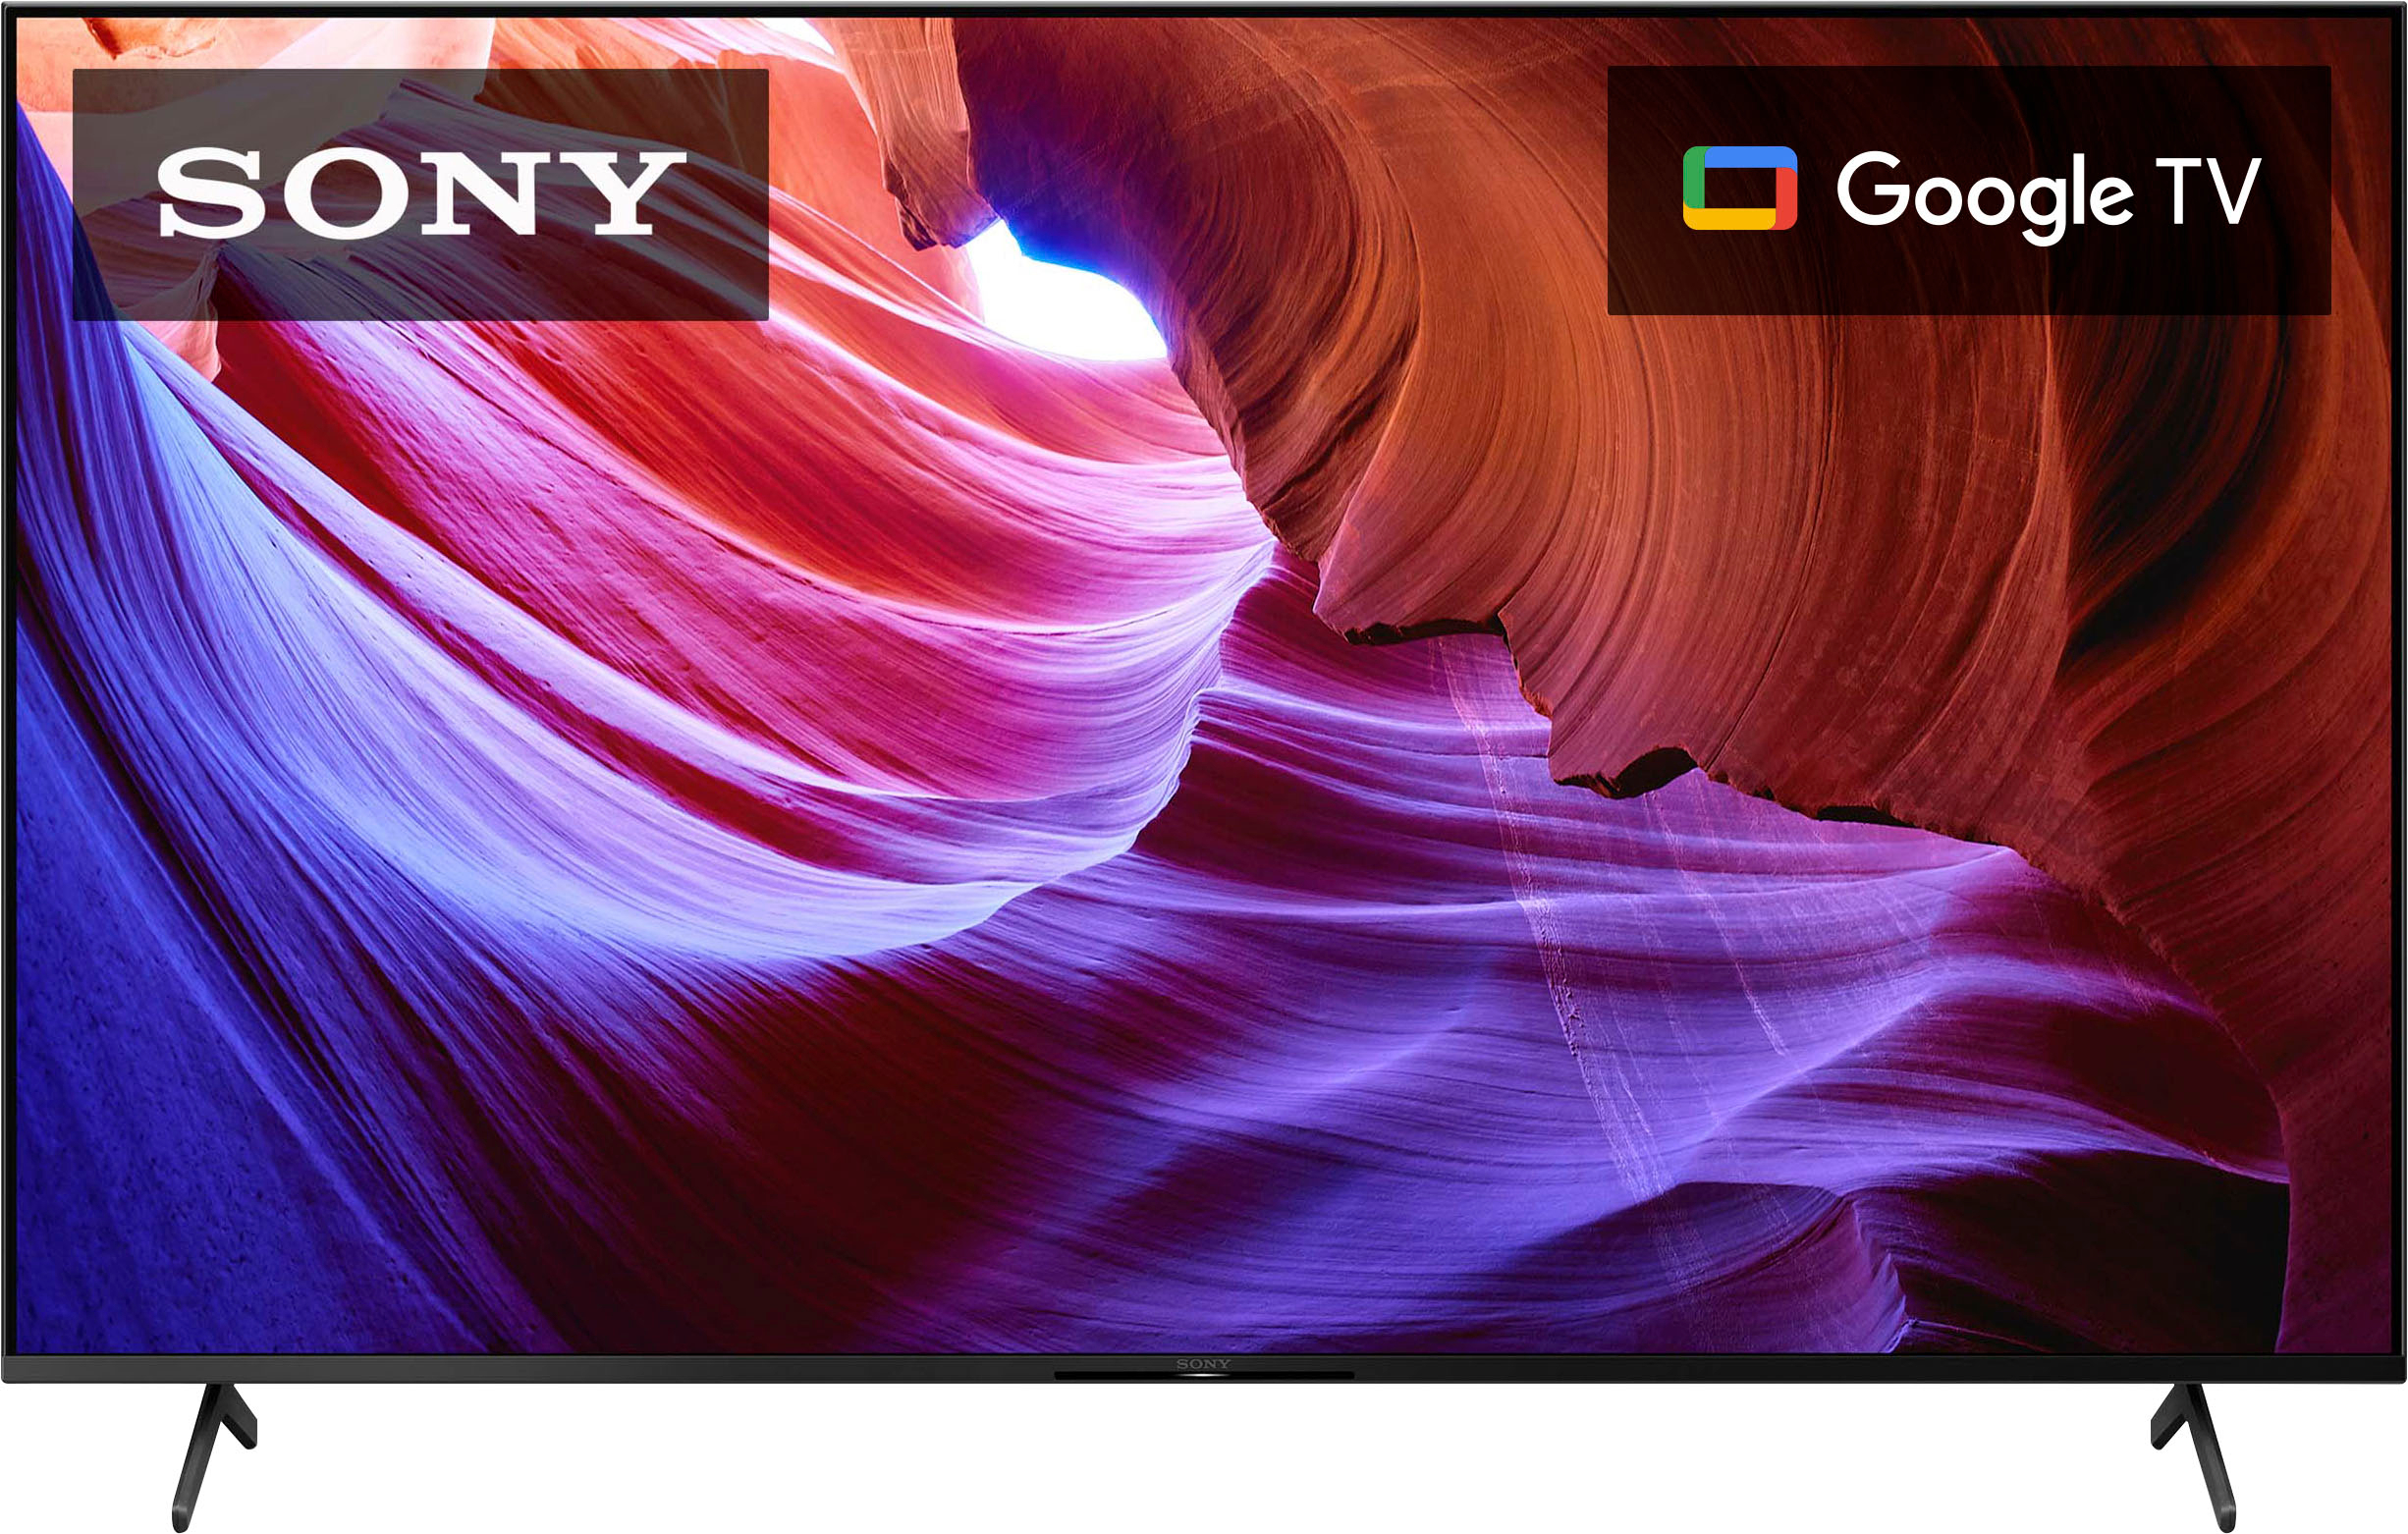 SONY 65" X85K Series 120Hz 4K UHD HDR LED Smart TV @ Amazon $798